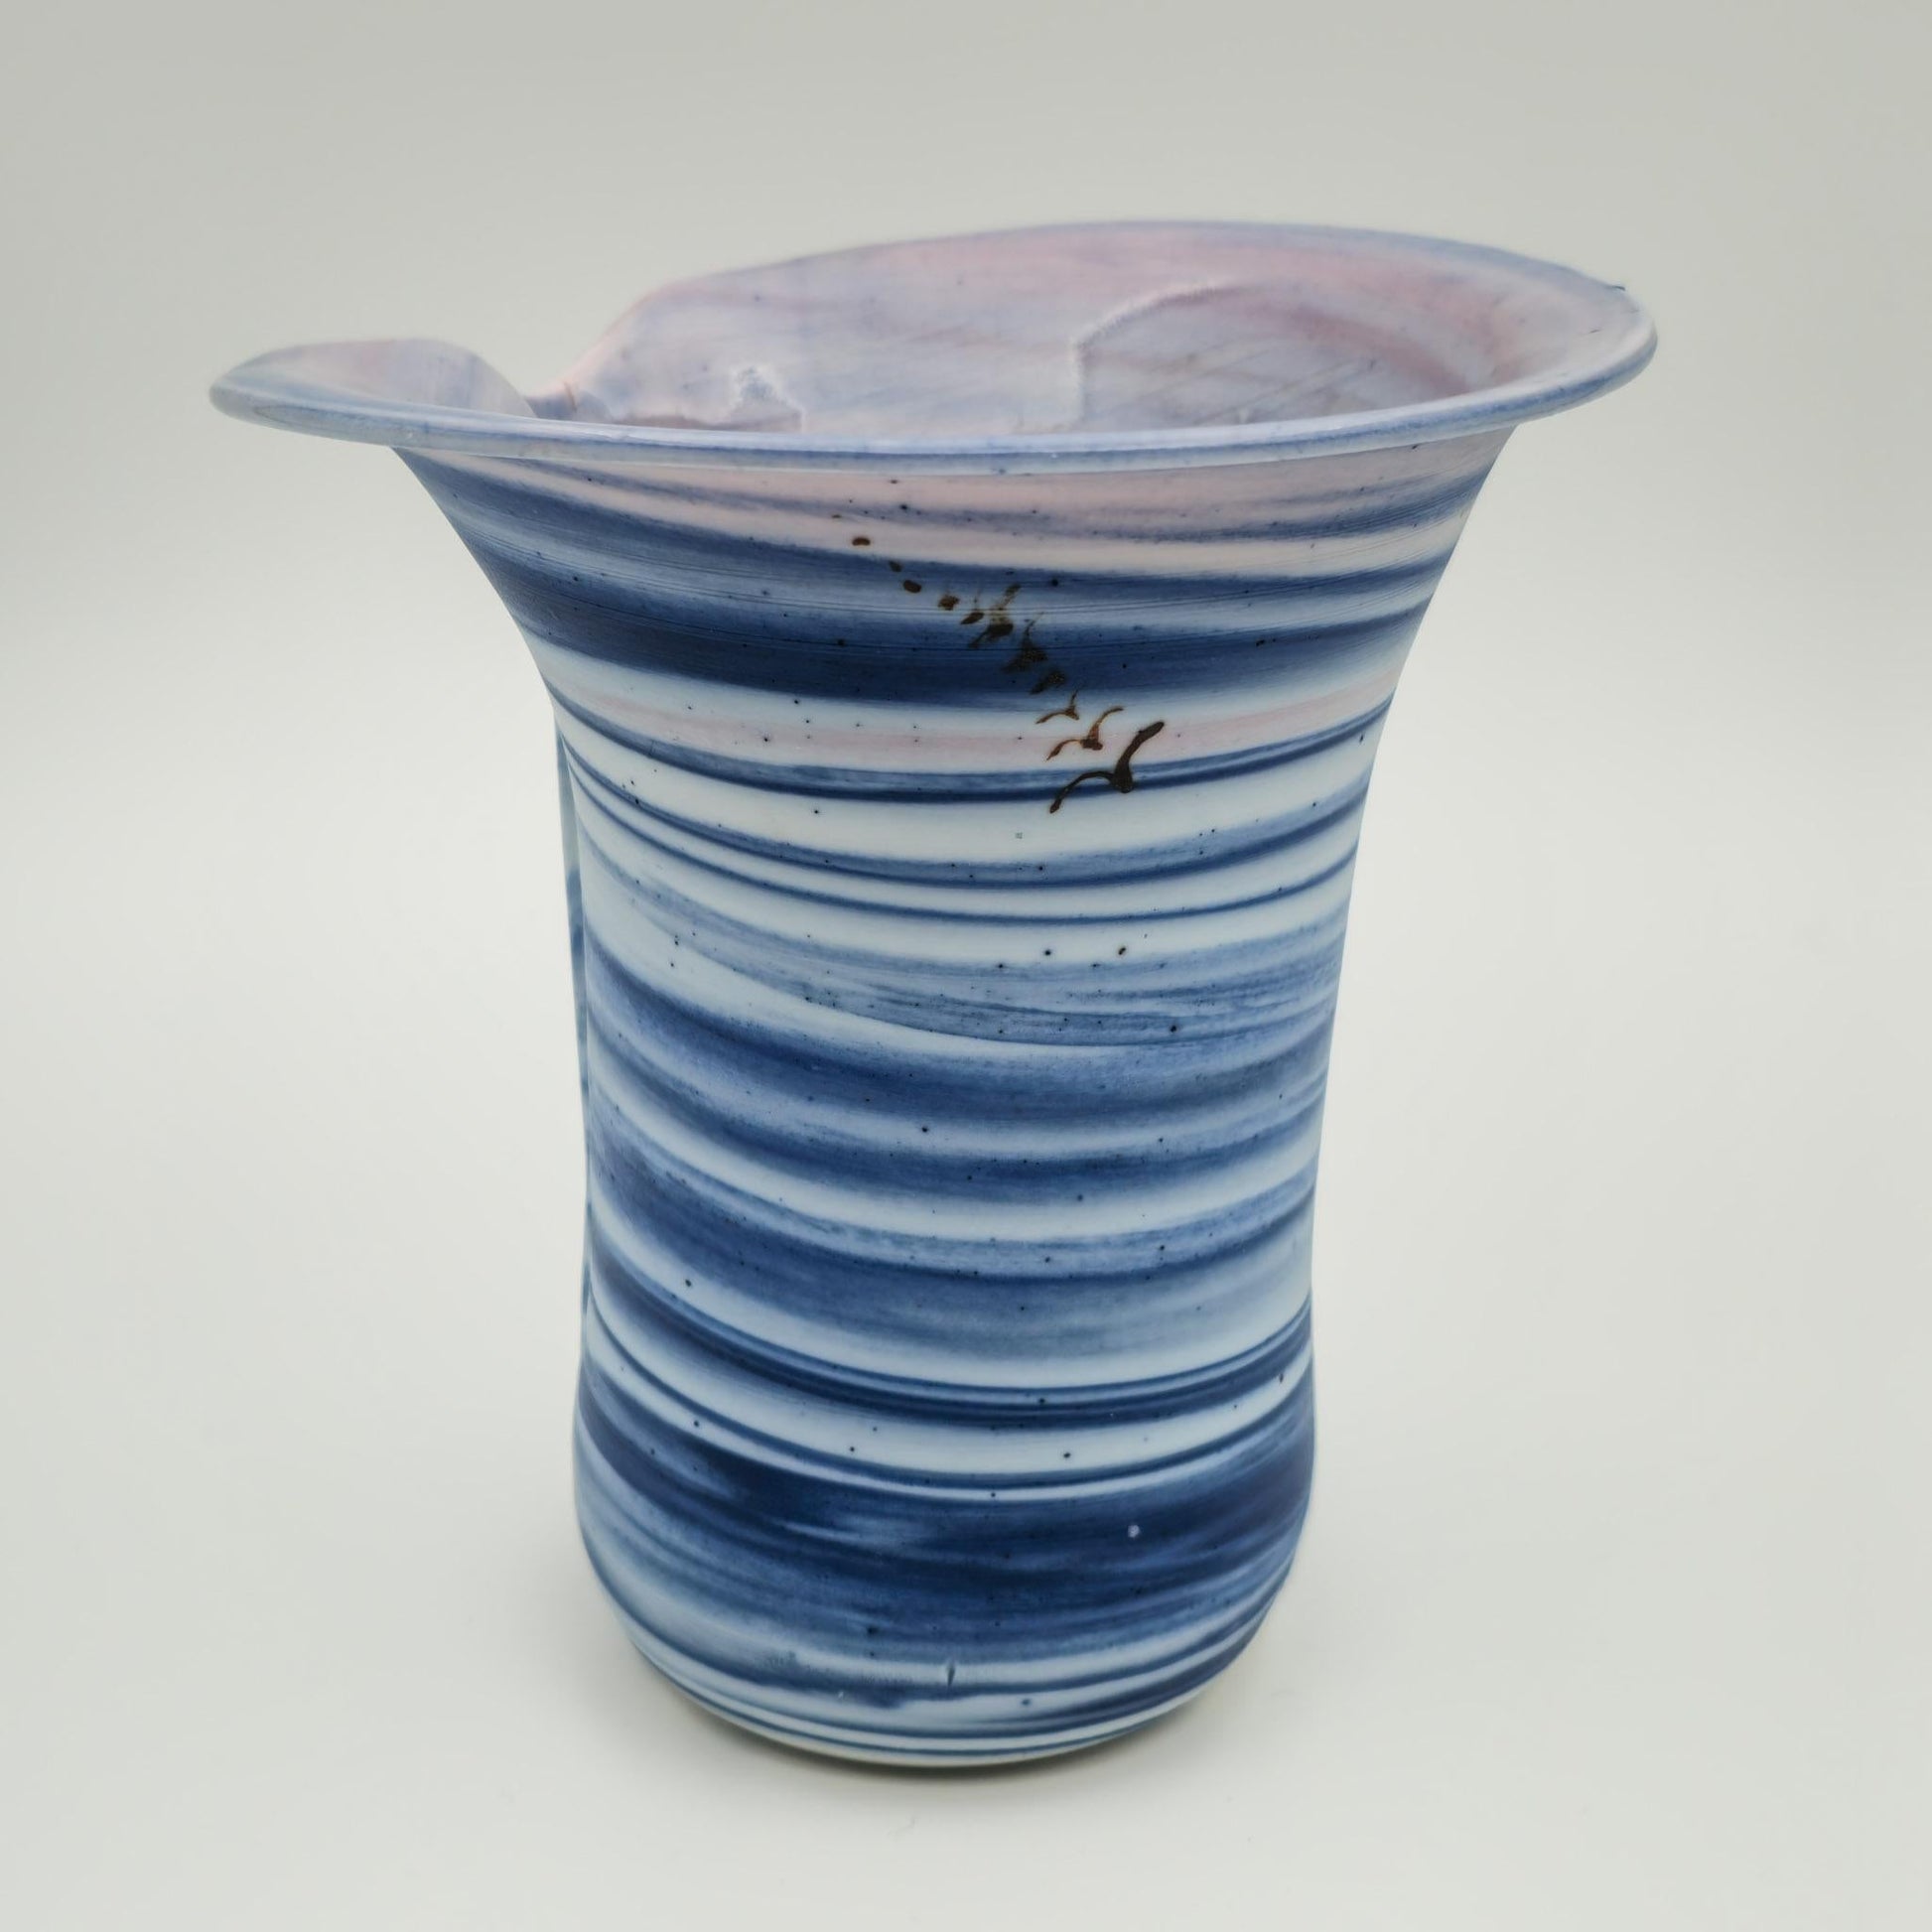 GERDA ØSTERGAARD Blue White Pink Ring-Glazed Stoneware Vase Mollaris.com 